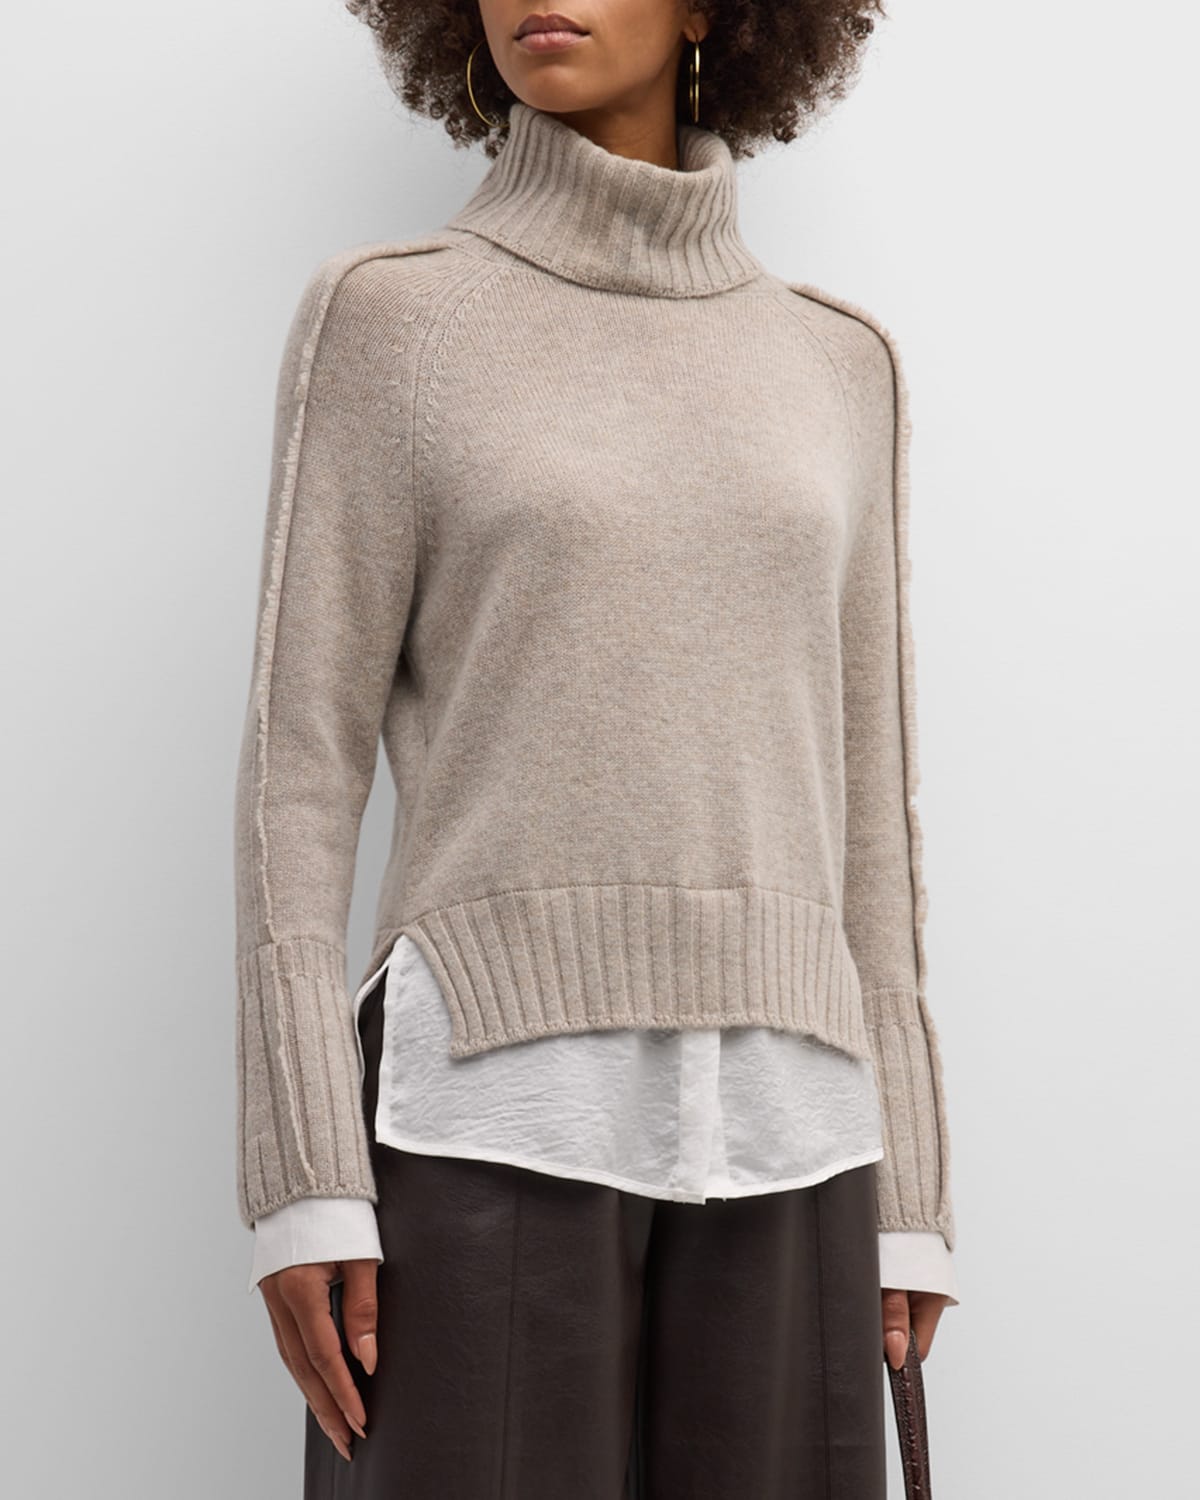 The Jolie Layered Turtleneck Sweater